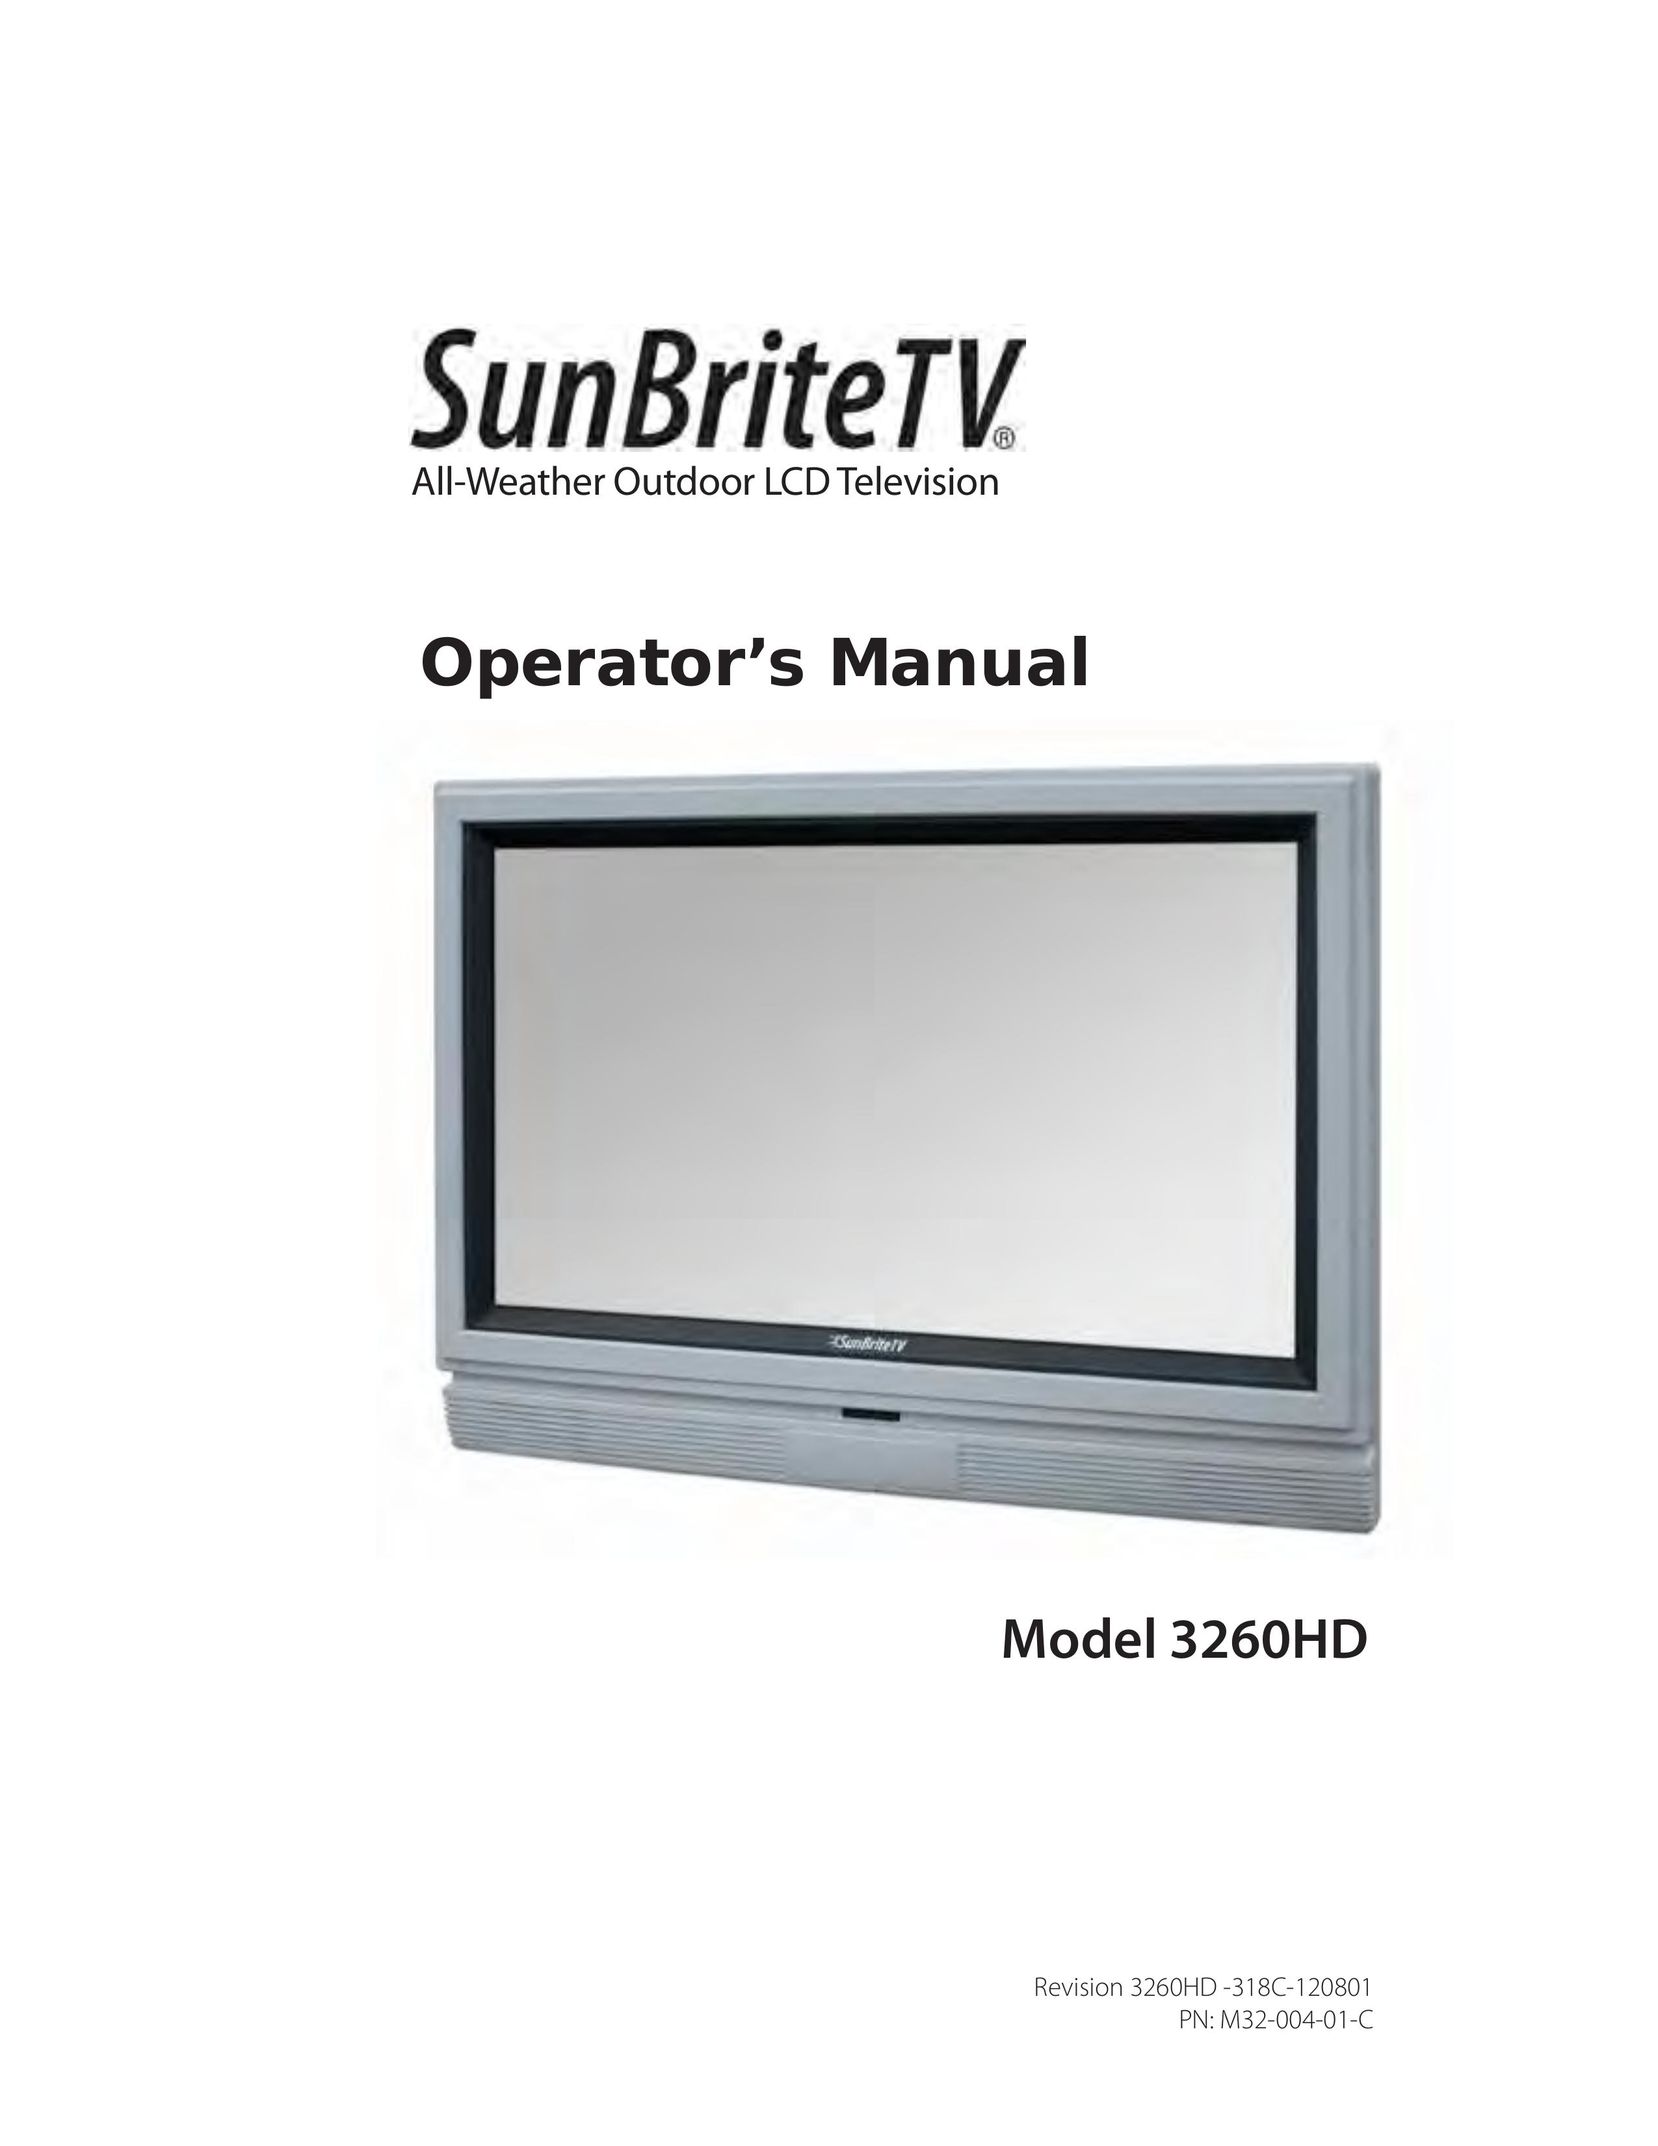 SunBriteTV M32-004-01-C Flat Panel Television User Manual